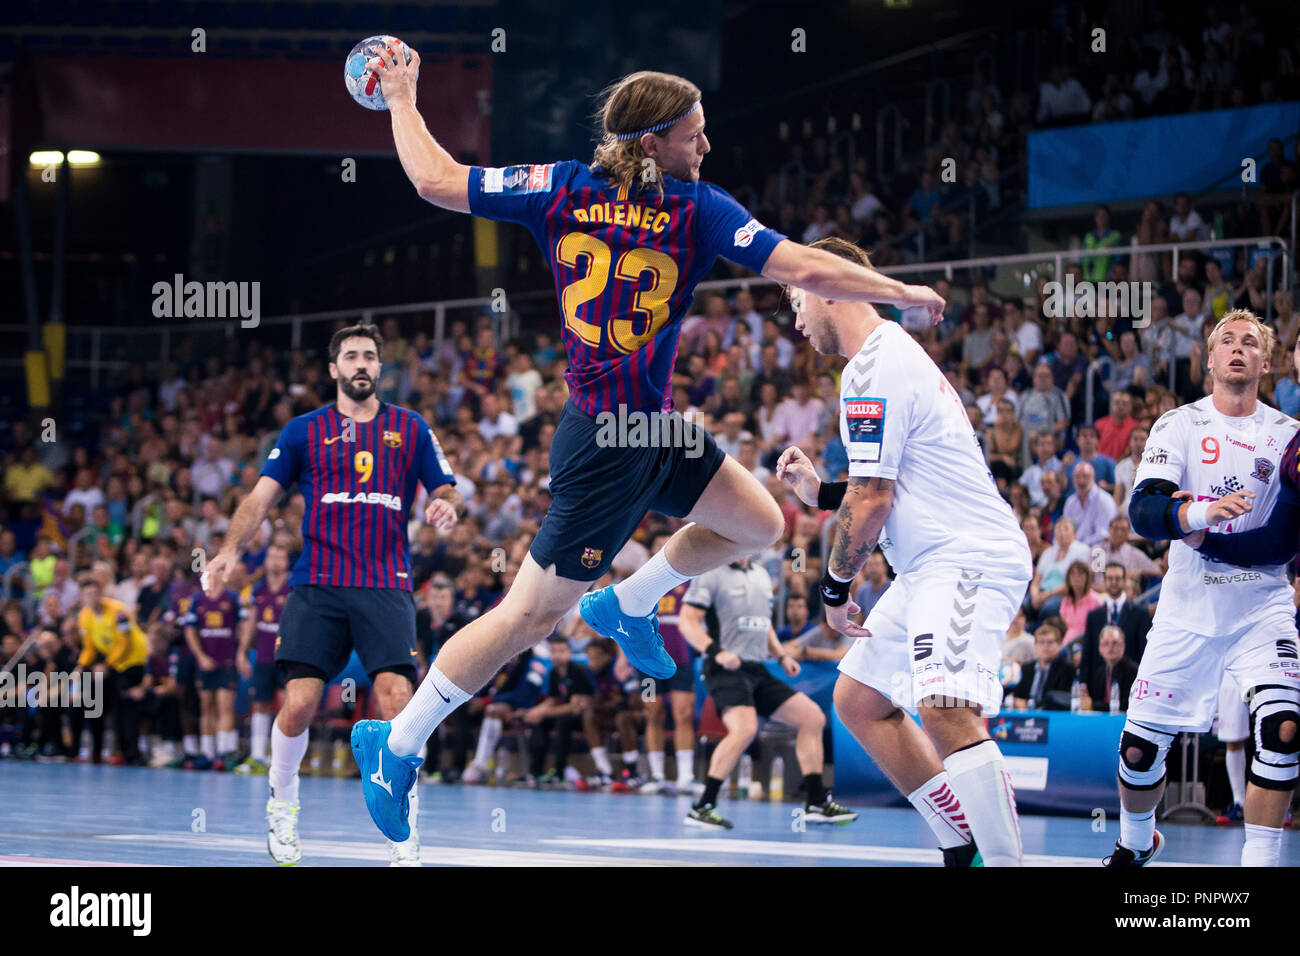 Barcelona, Spain. 22 September 2018. EHF Champions League Velux handball,  FC Barcelona Lassa versus Telekom Veszprem HC; Jure Dolenec of FC Barcelona  Lassa Credit: UKKO Images/Alamy Live News Stock Photo - Alamy